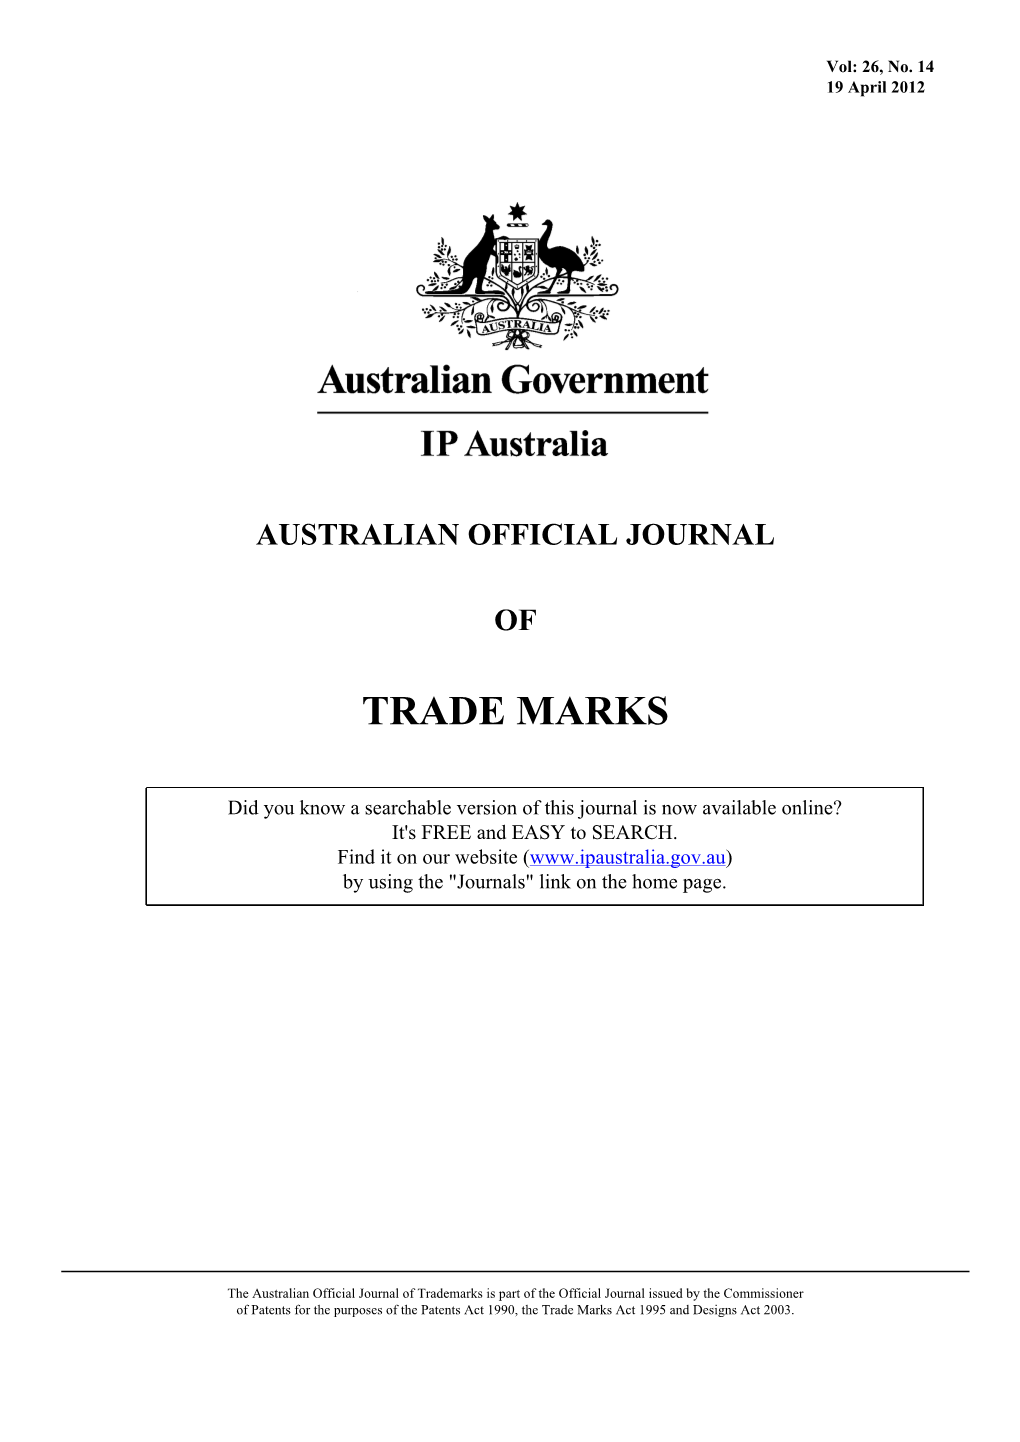 AUSTRALIAN OFFICIAL JOURNAL of TRADE MARKS 19 April 2012